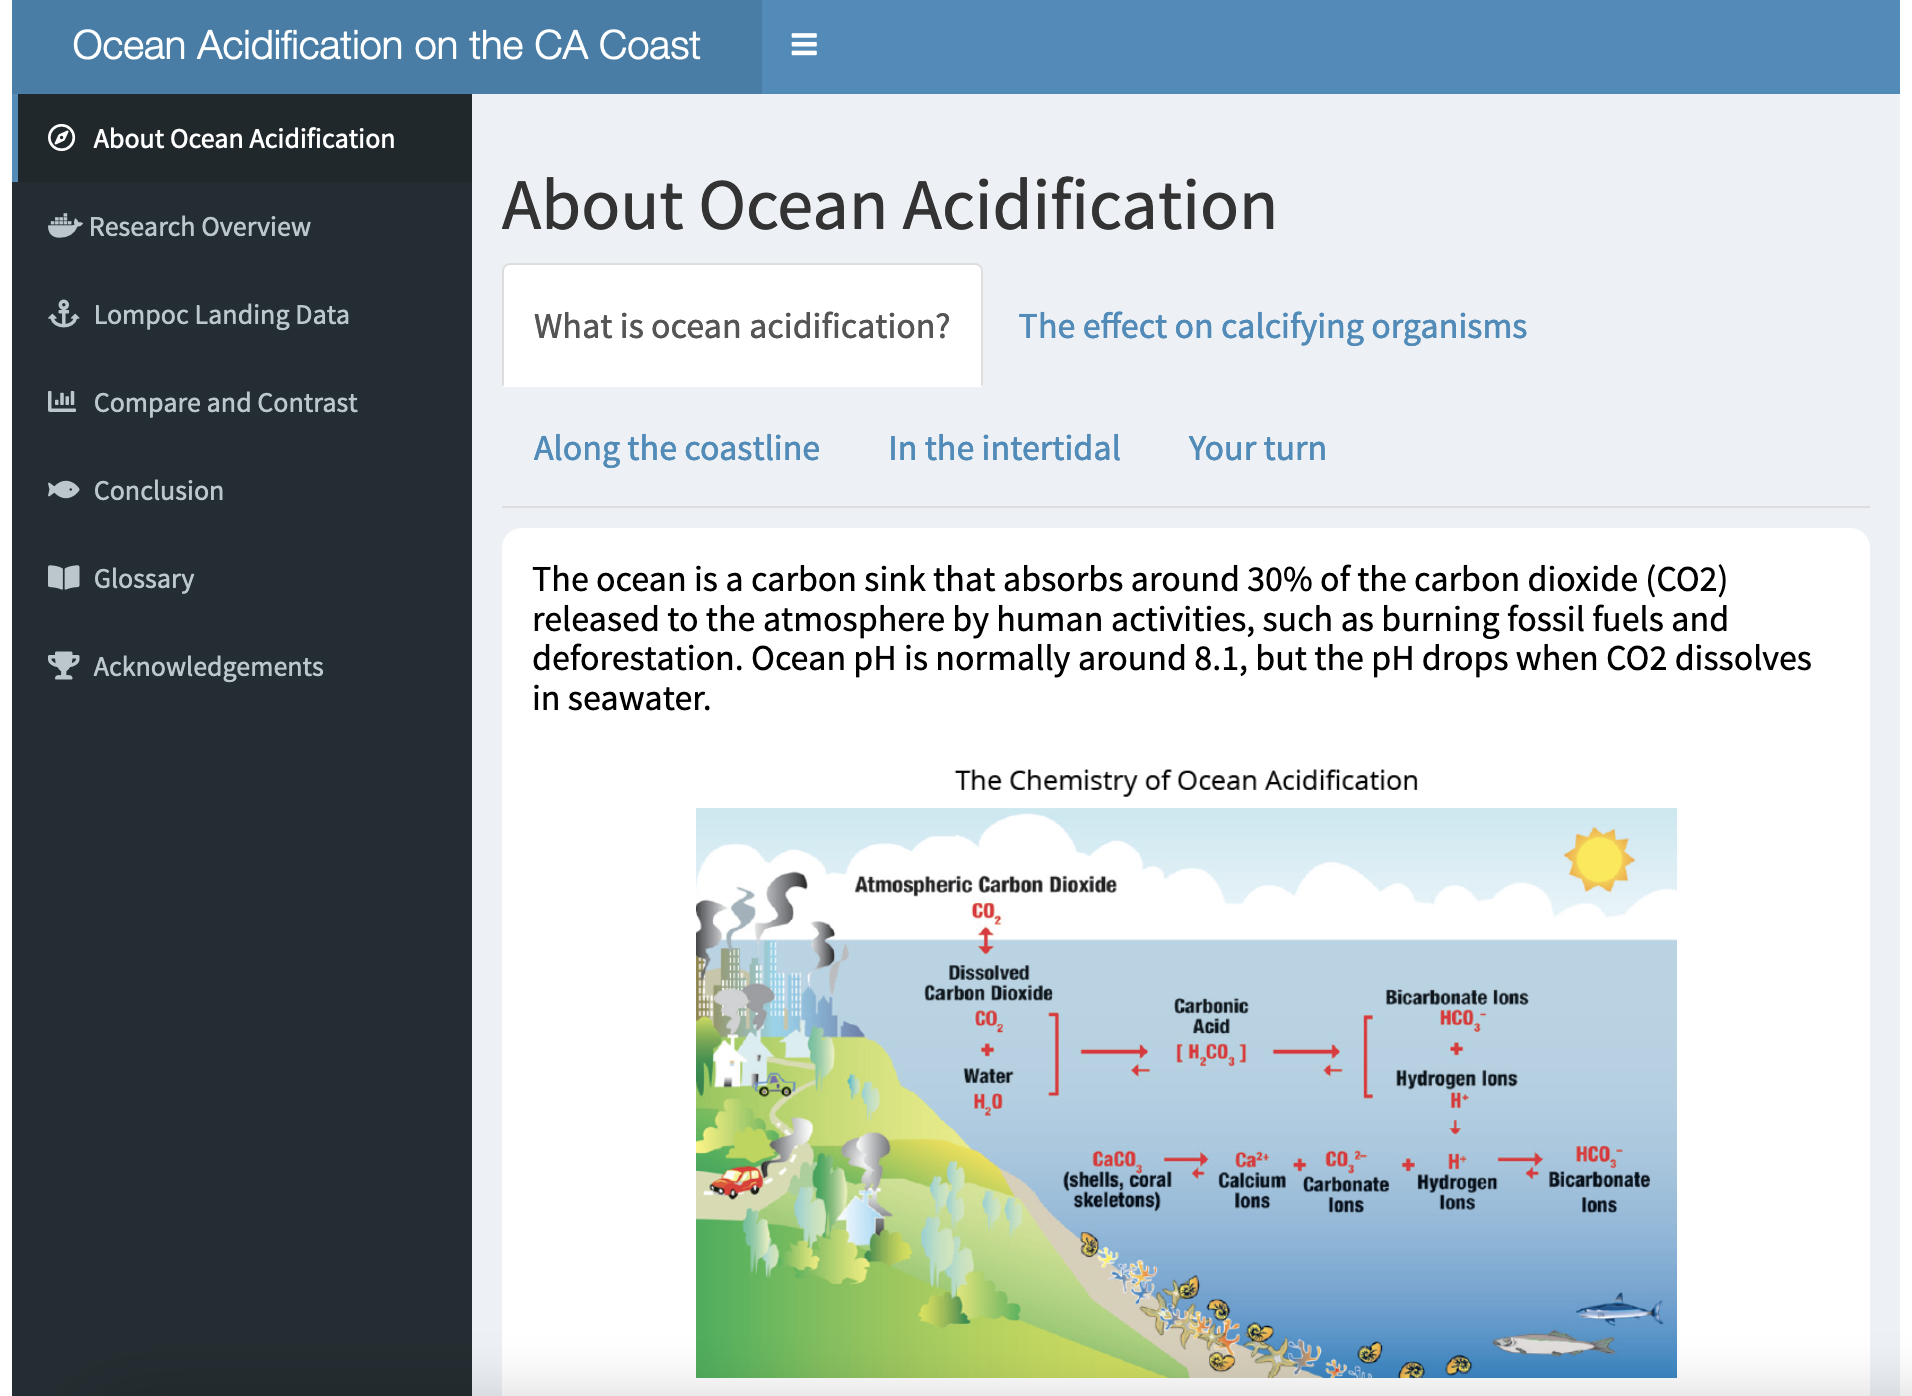 Shiny App for the Ocean Acidification Learning Module